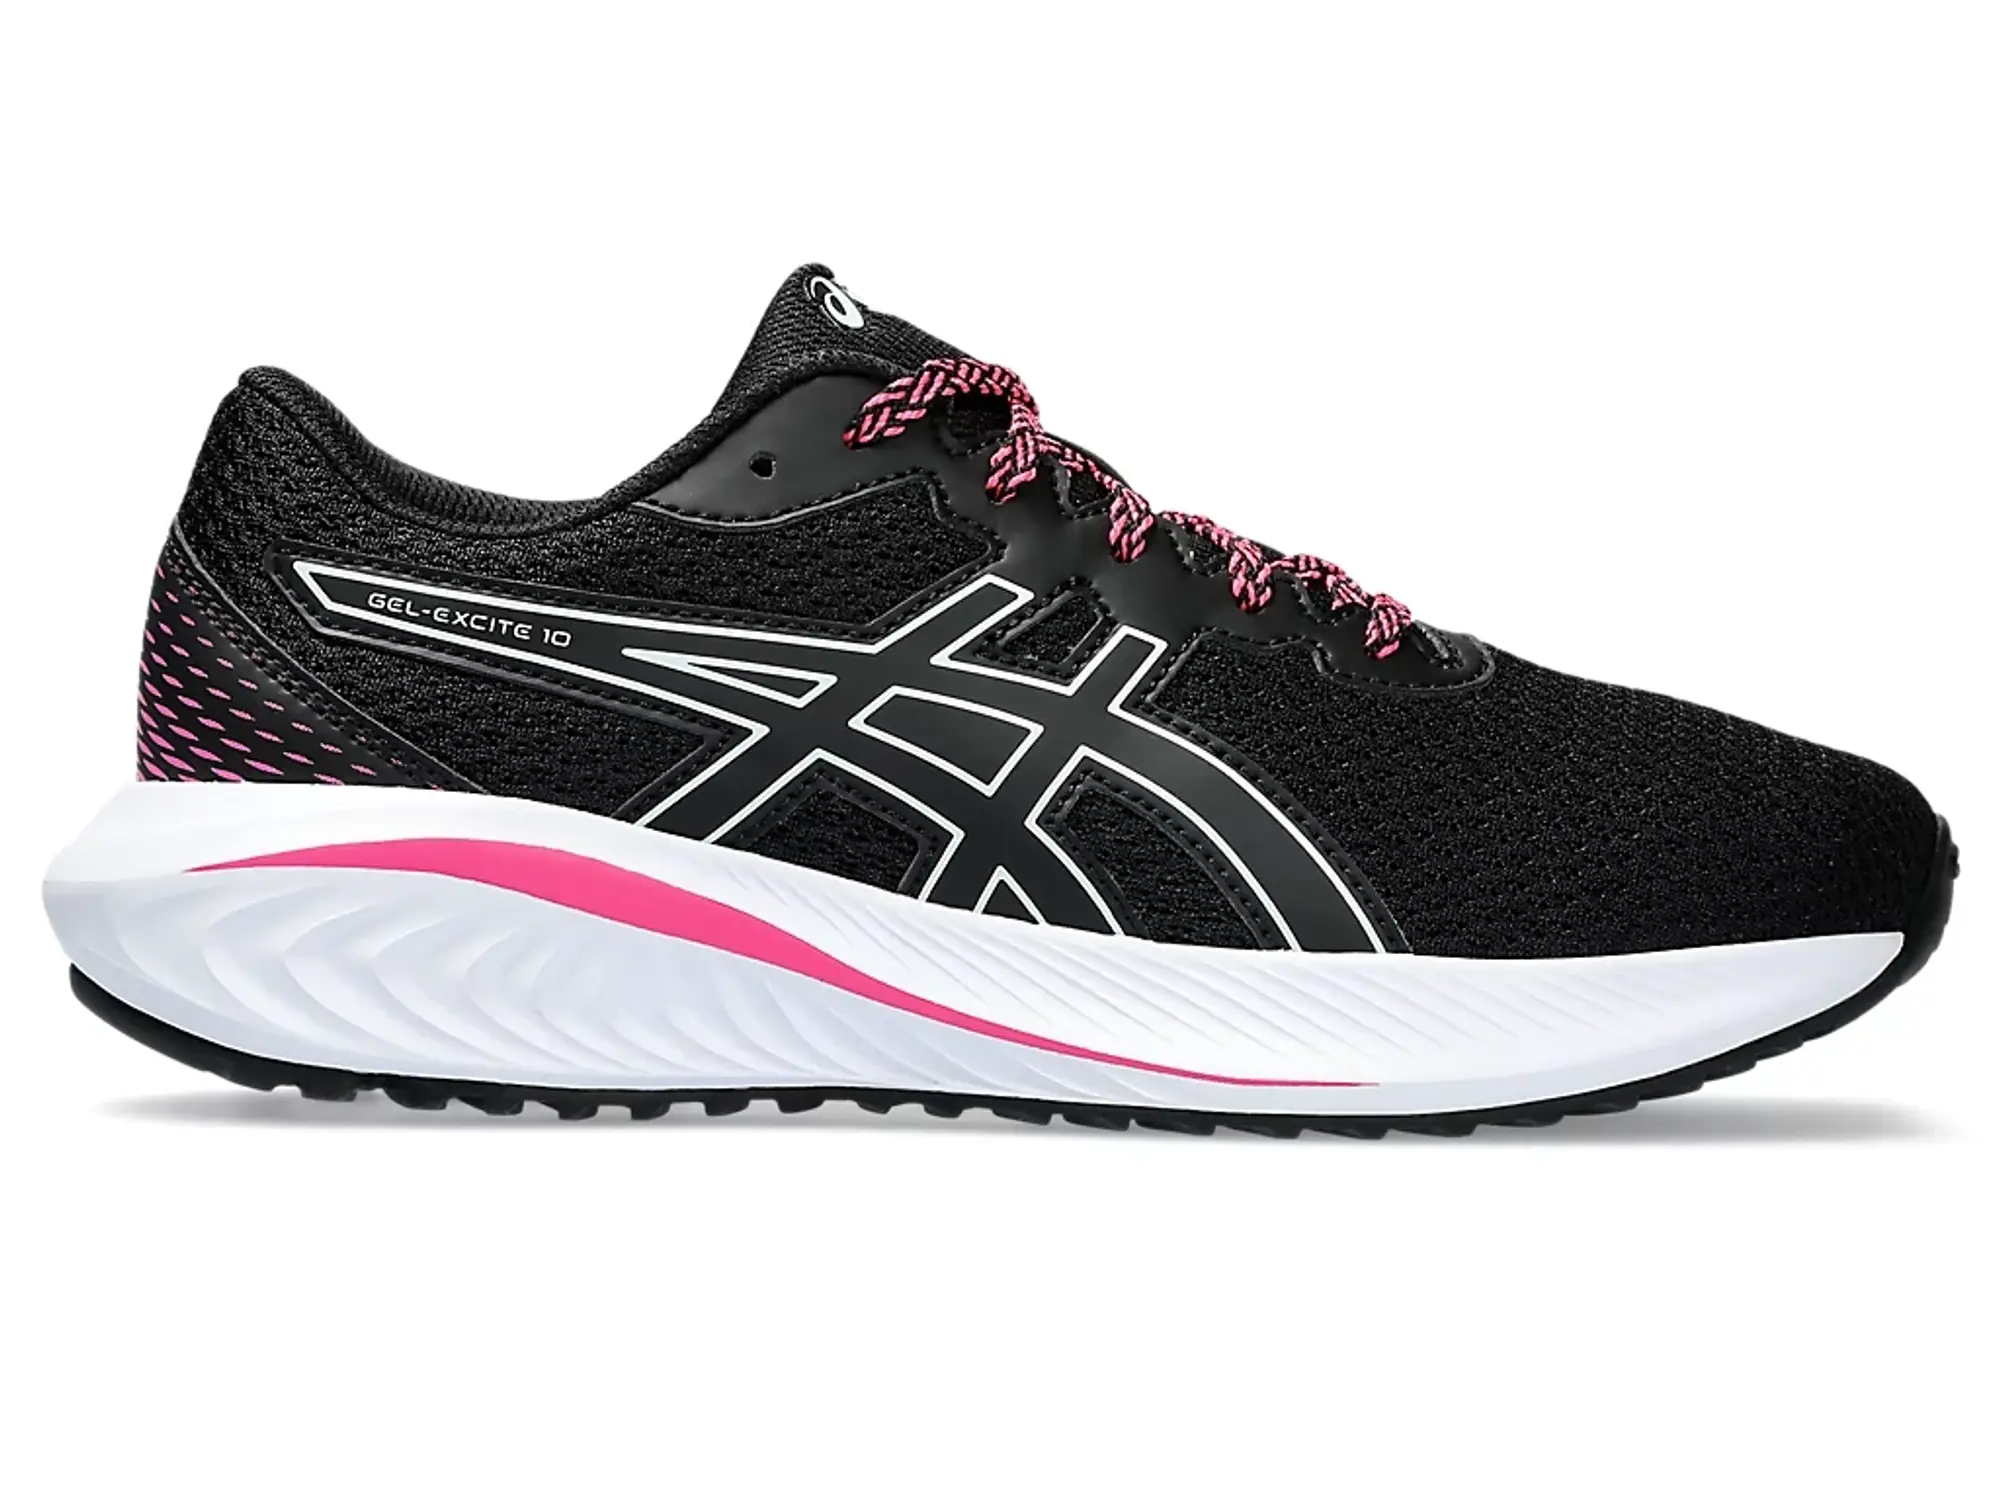 Girls' Asics Gel Excite 10 Running Shoes - Black Pink